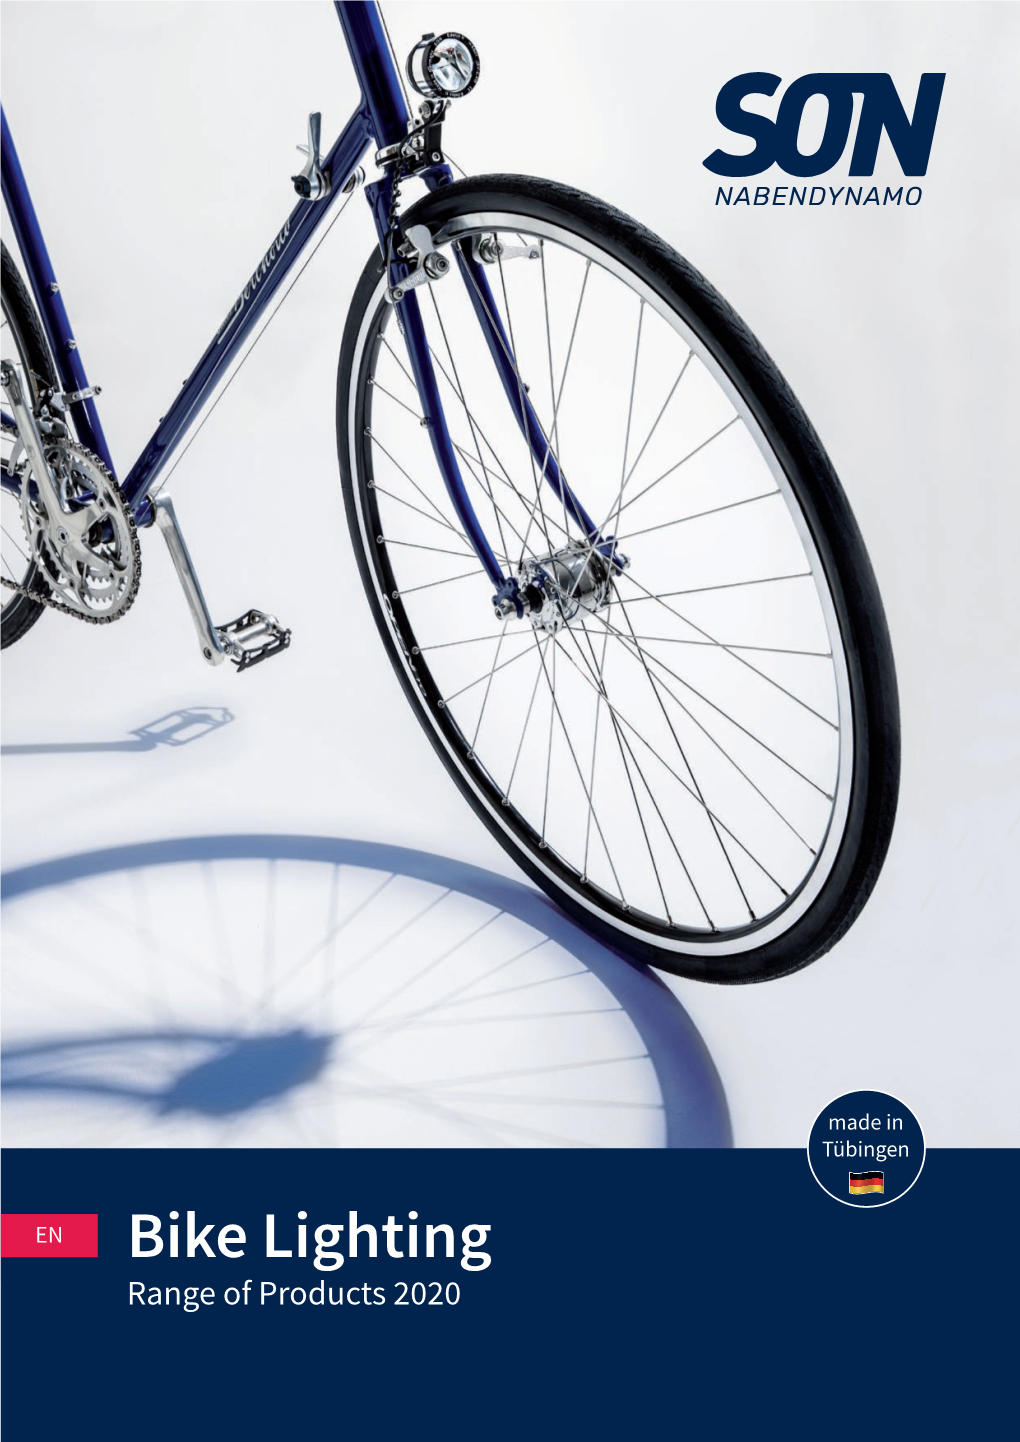 Bike Lighting Range of Products 2020 Kapitel – Unterkapitel